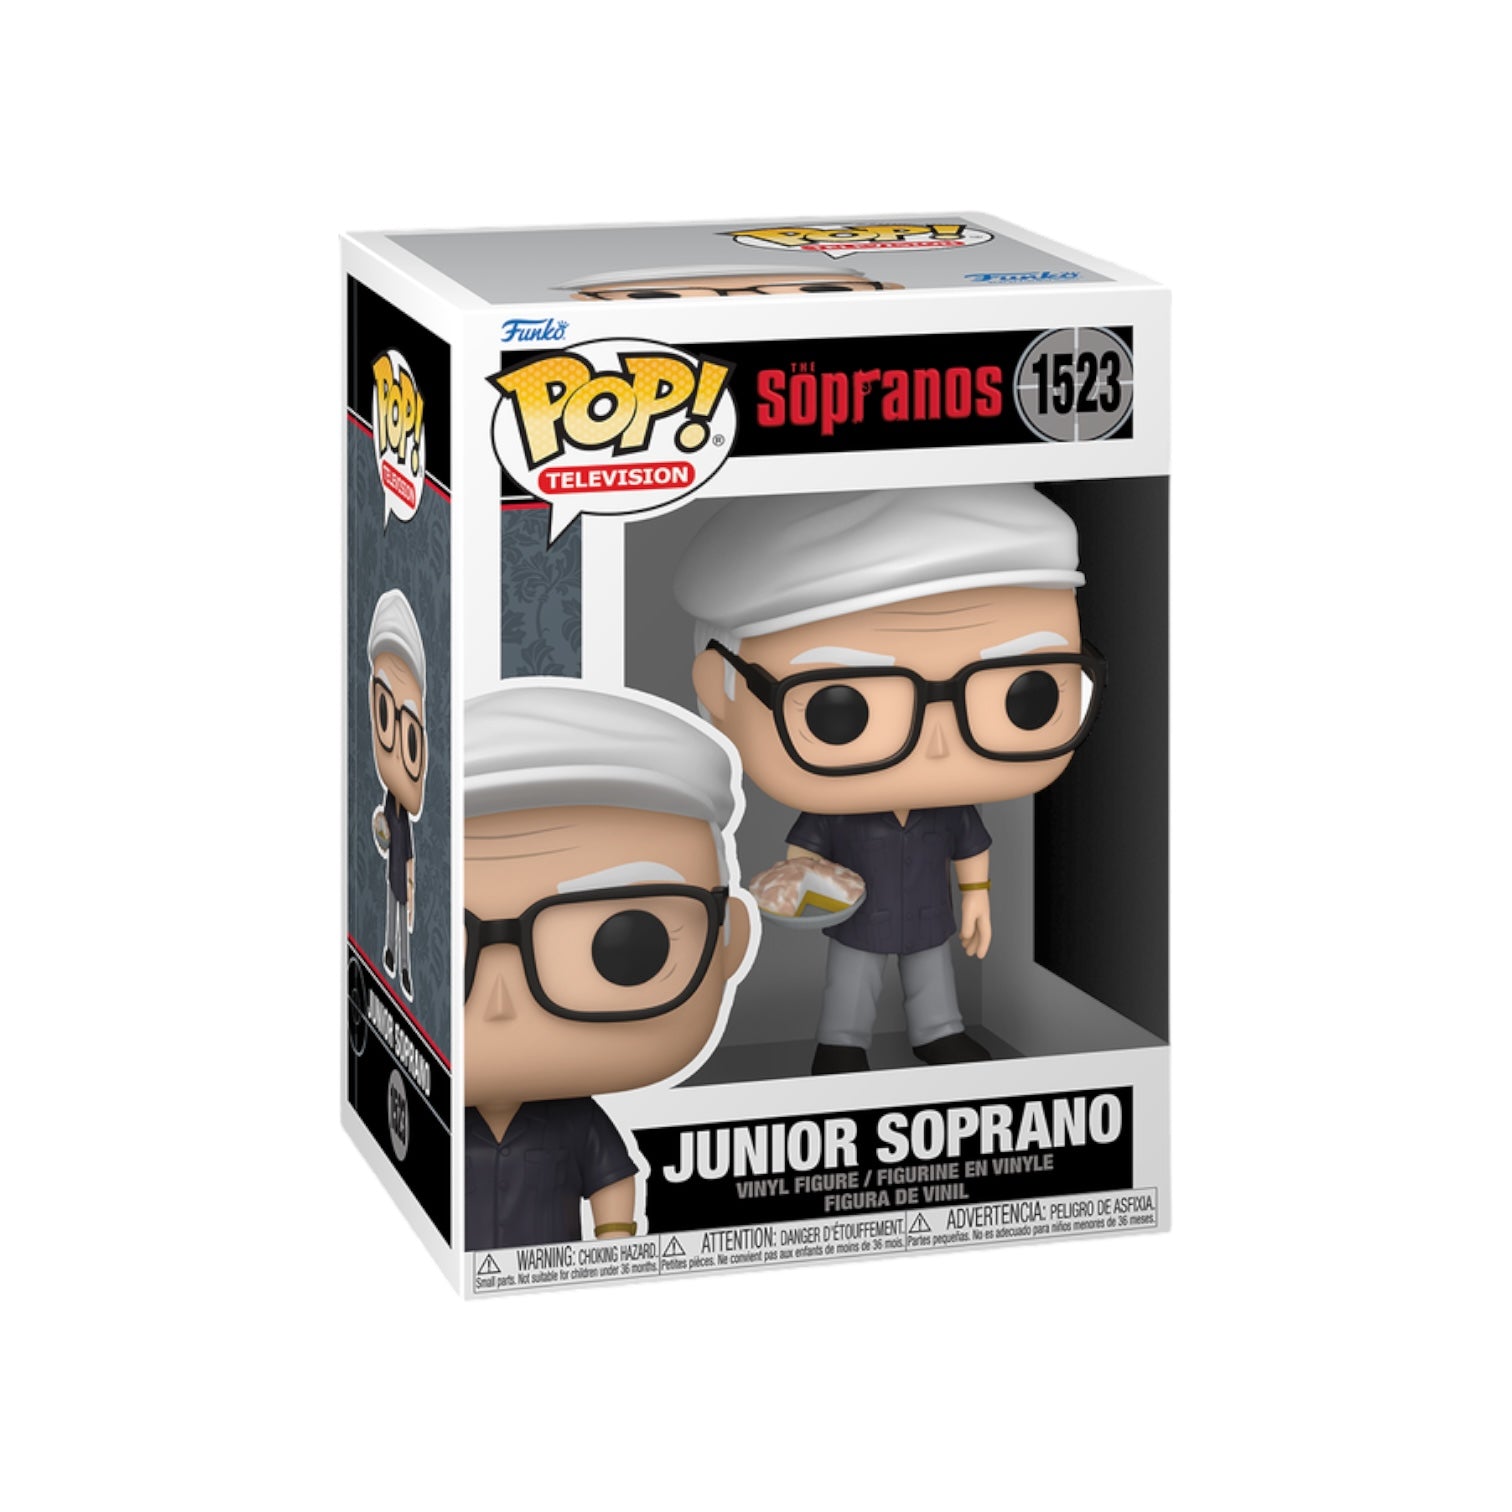 Junior Soprano #1523 Funko Pop! - Sopranos - PREORDER